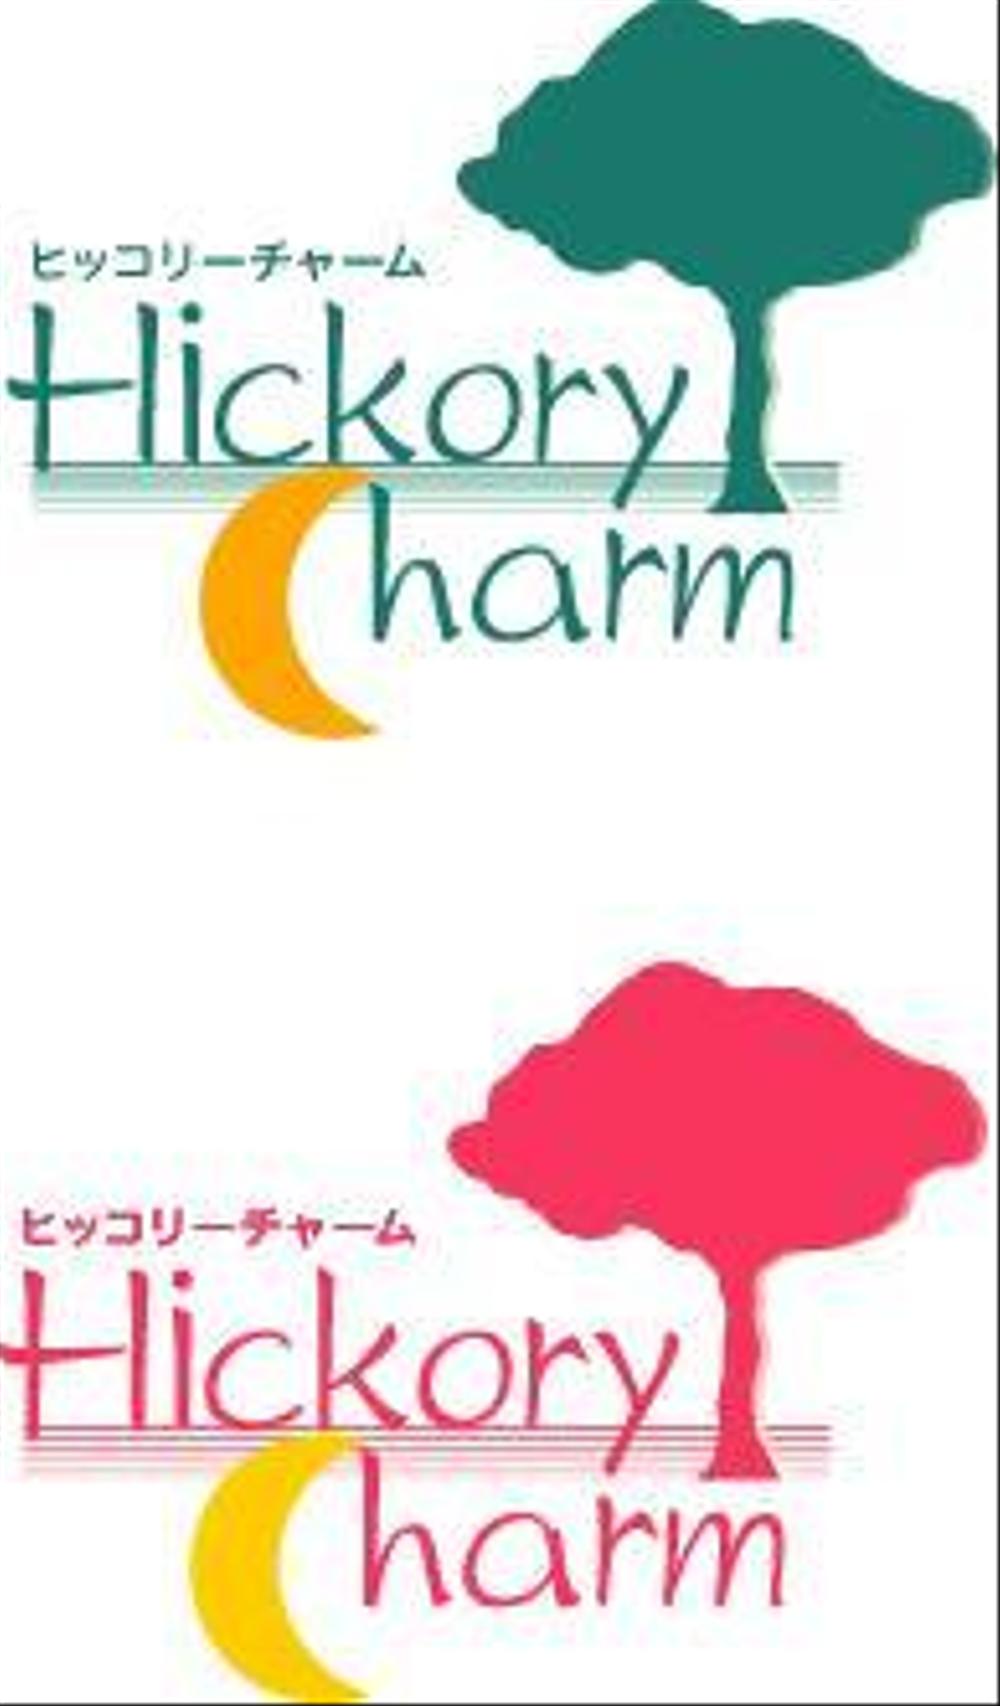 Hickory04.jpeg